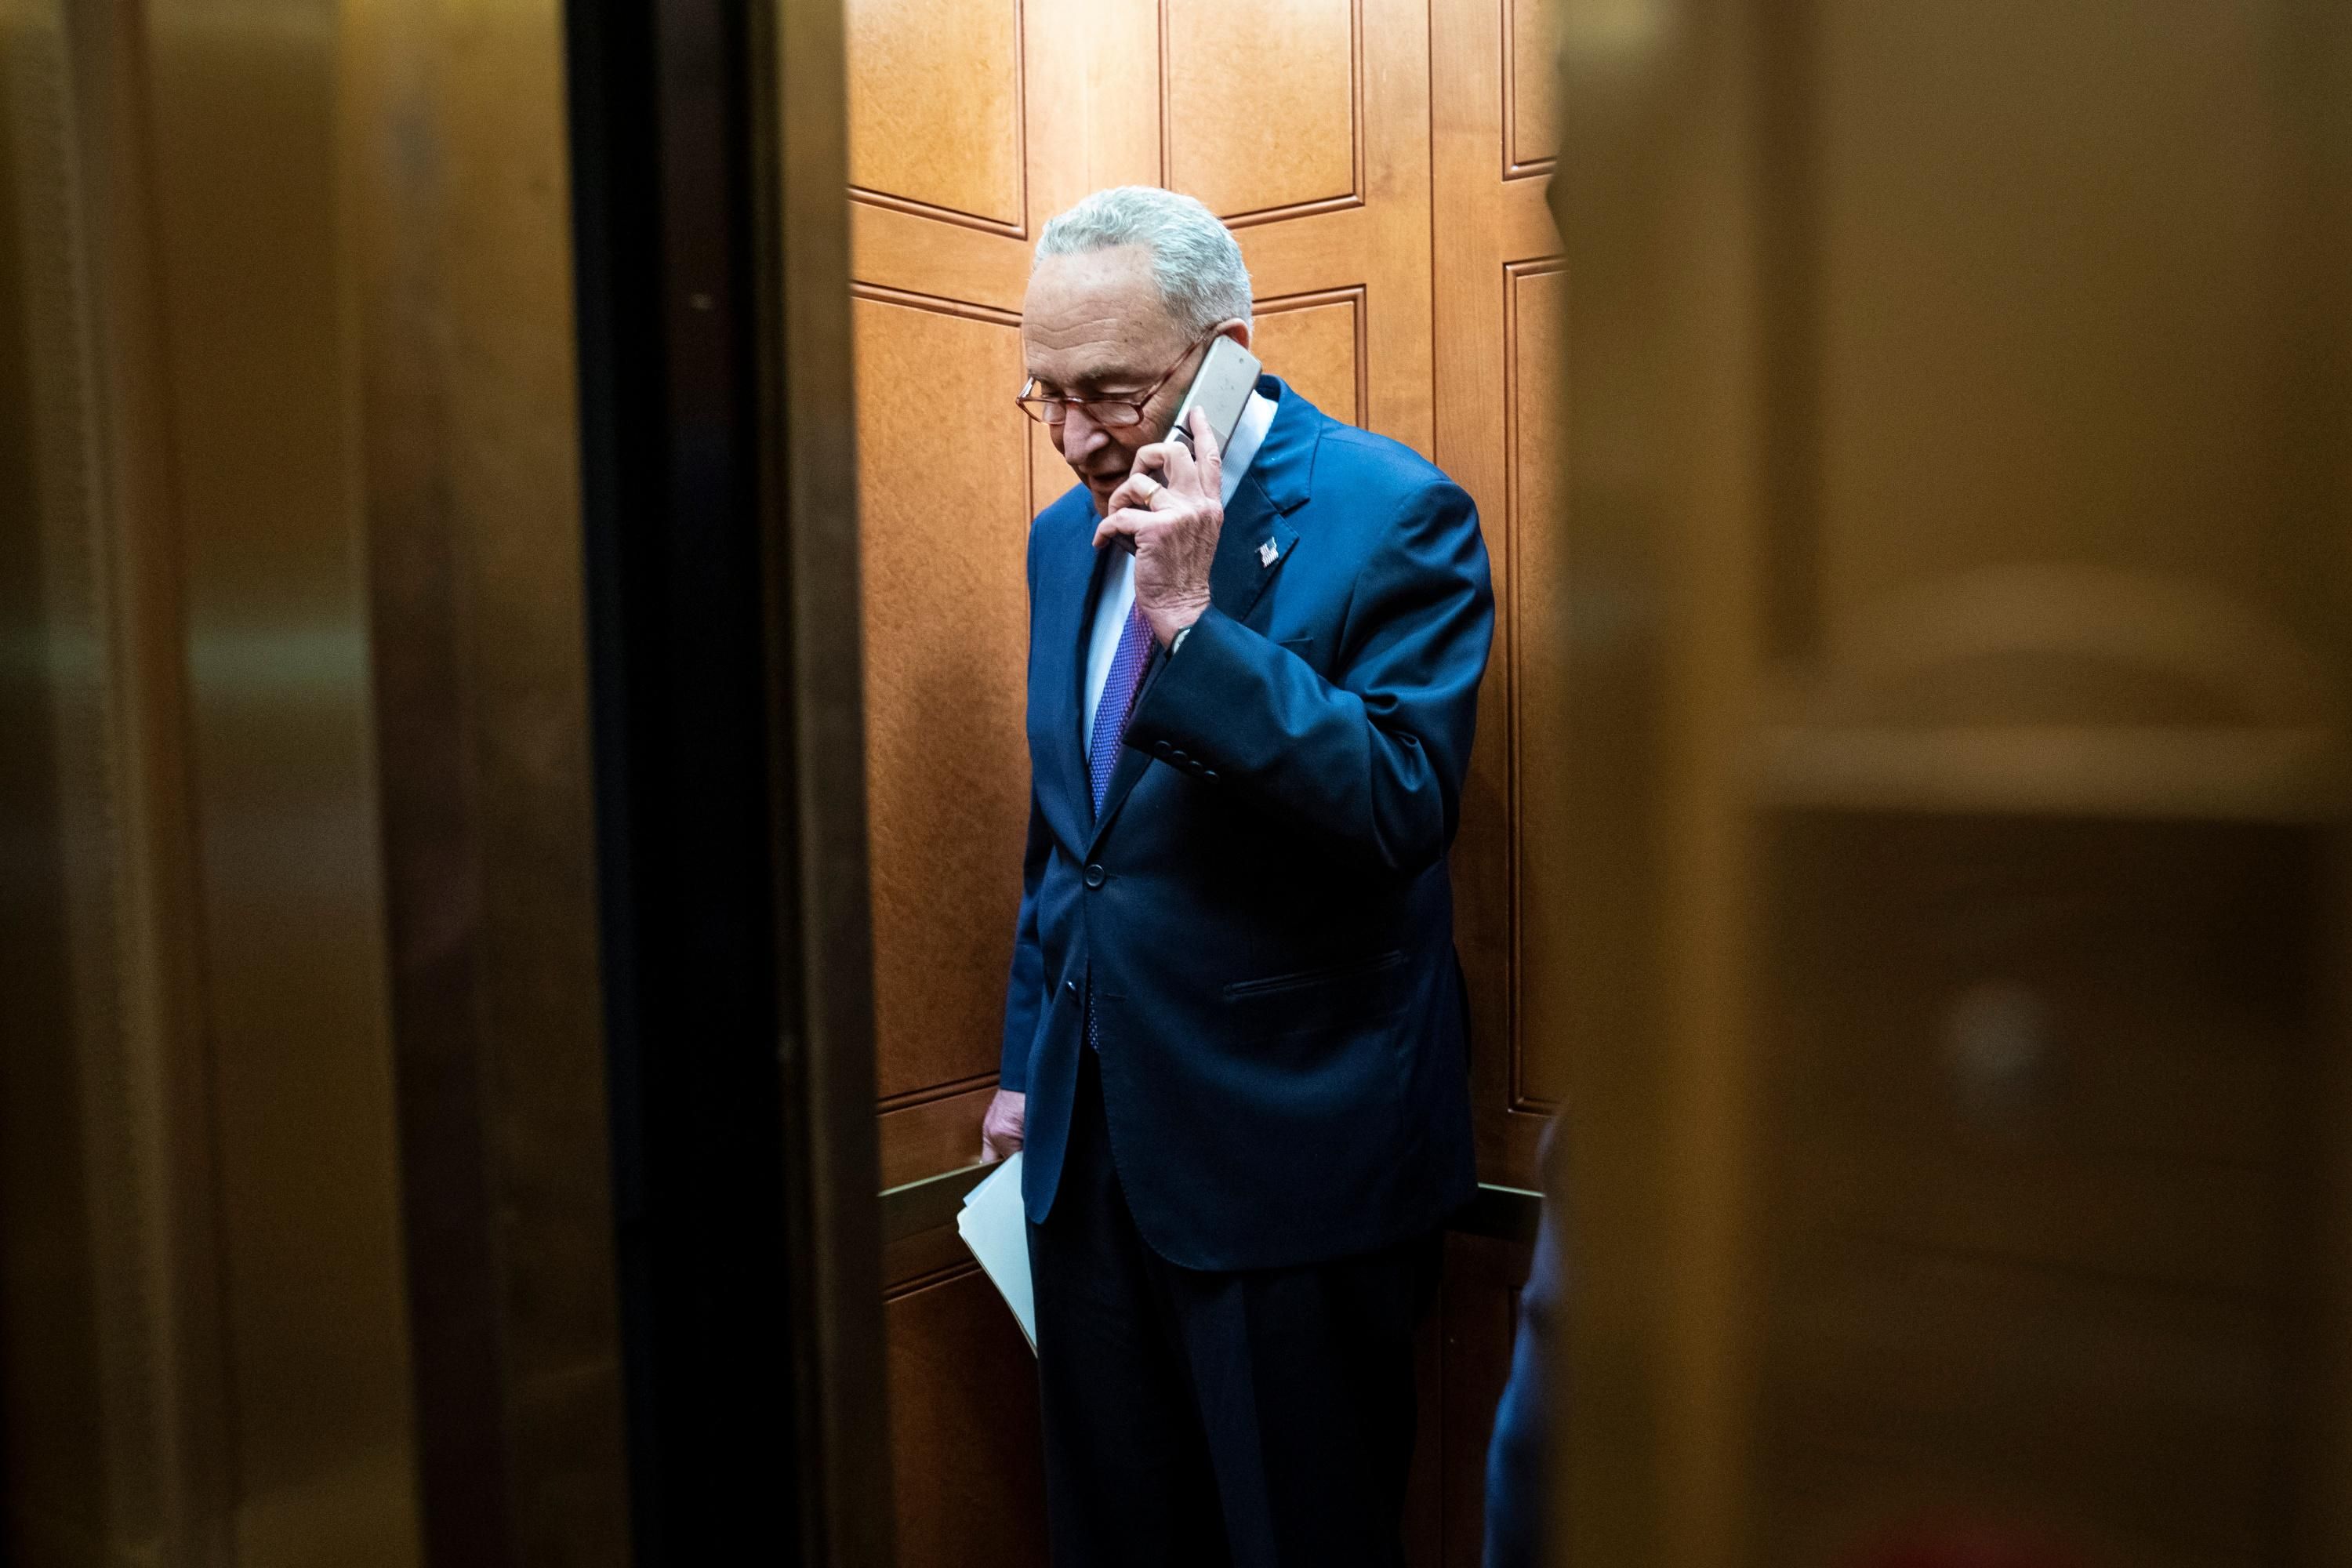 Senate Majority Leader Chuck Schumer talks on the phone.